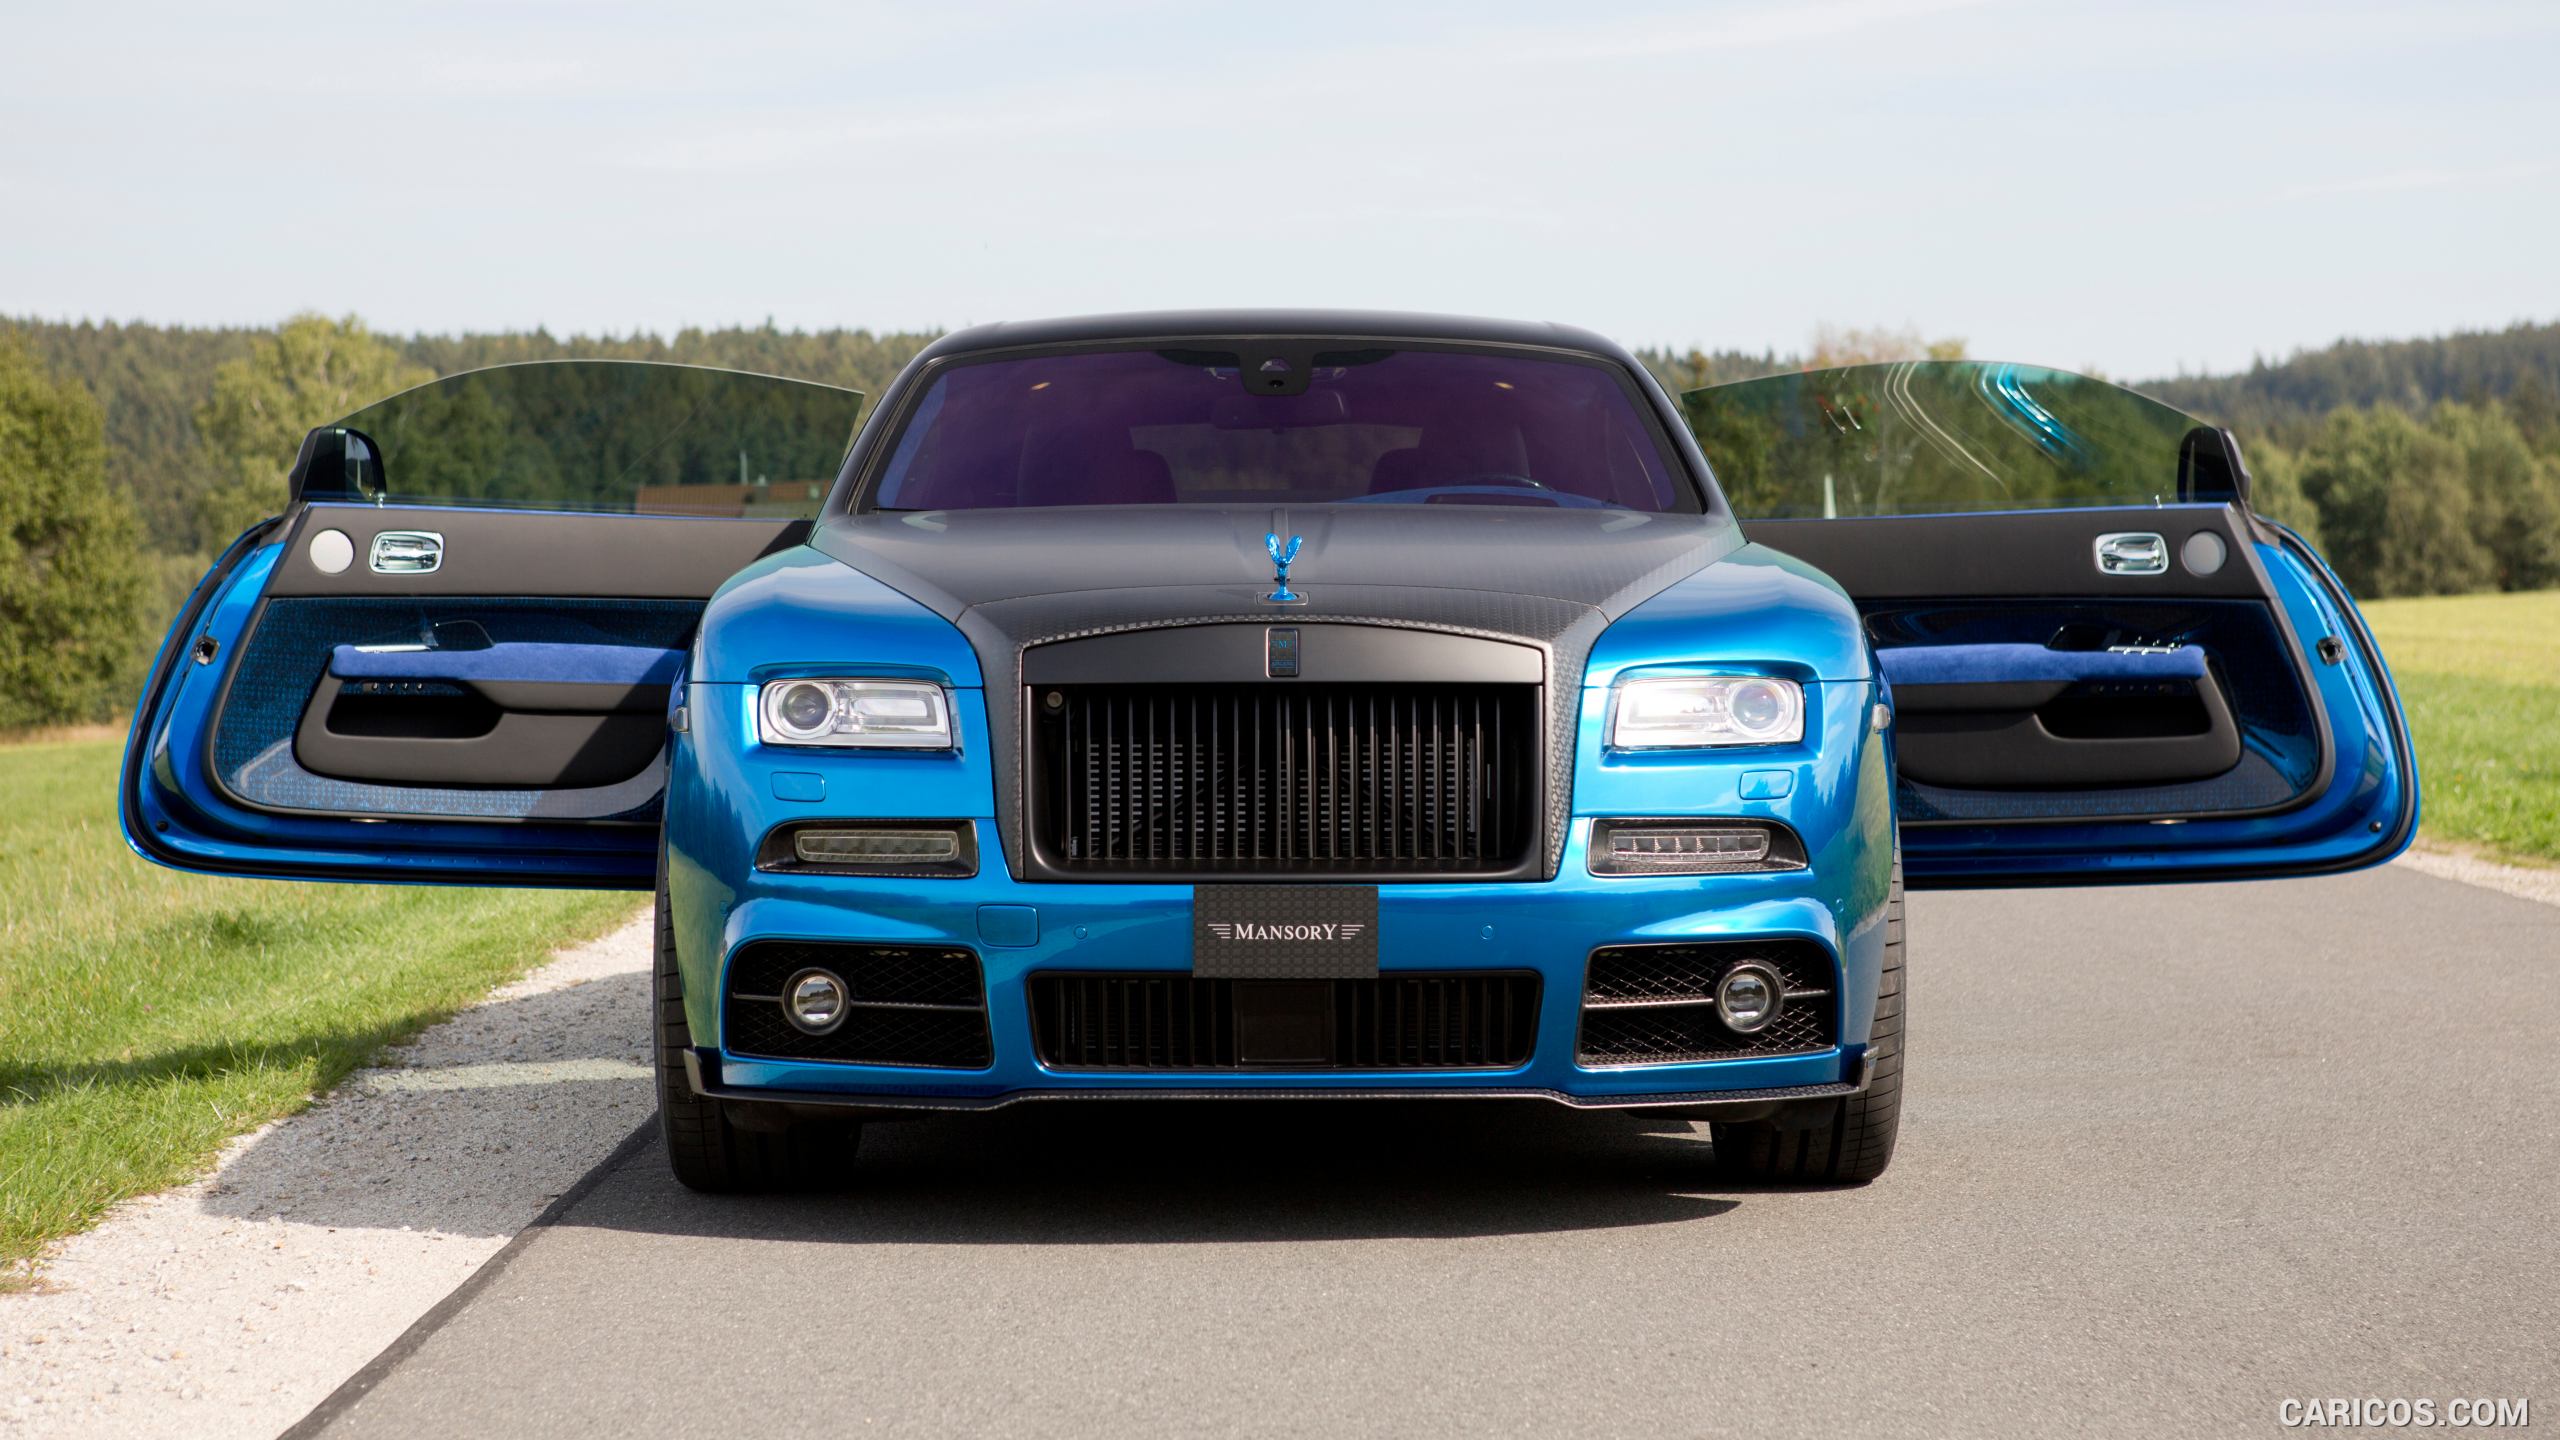 2015 MANSORY BLEURION based on Rolls-Royce Wraith - Front, #1 of 12